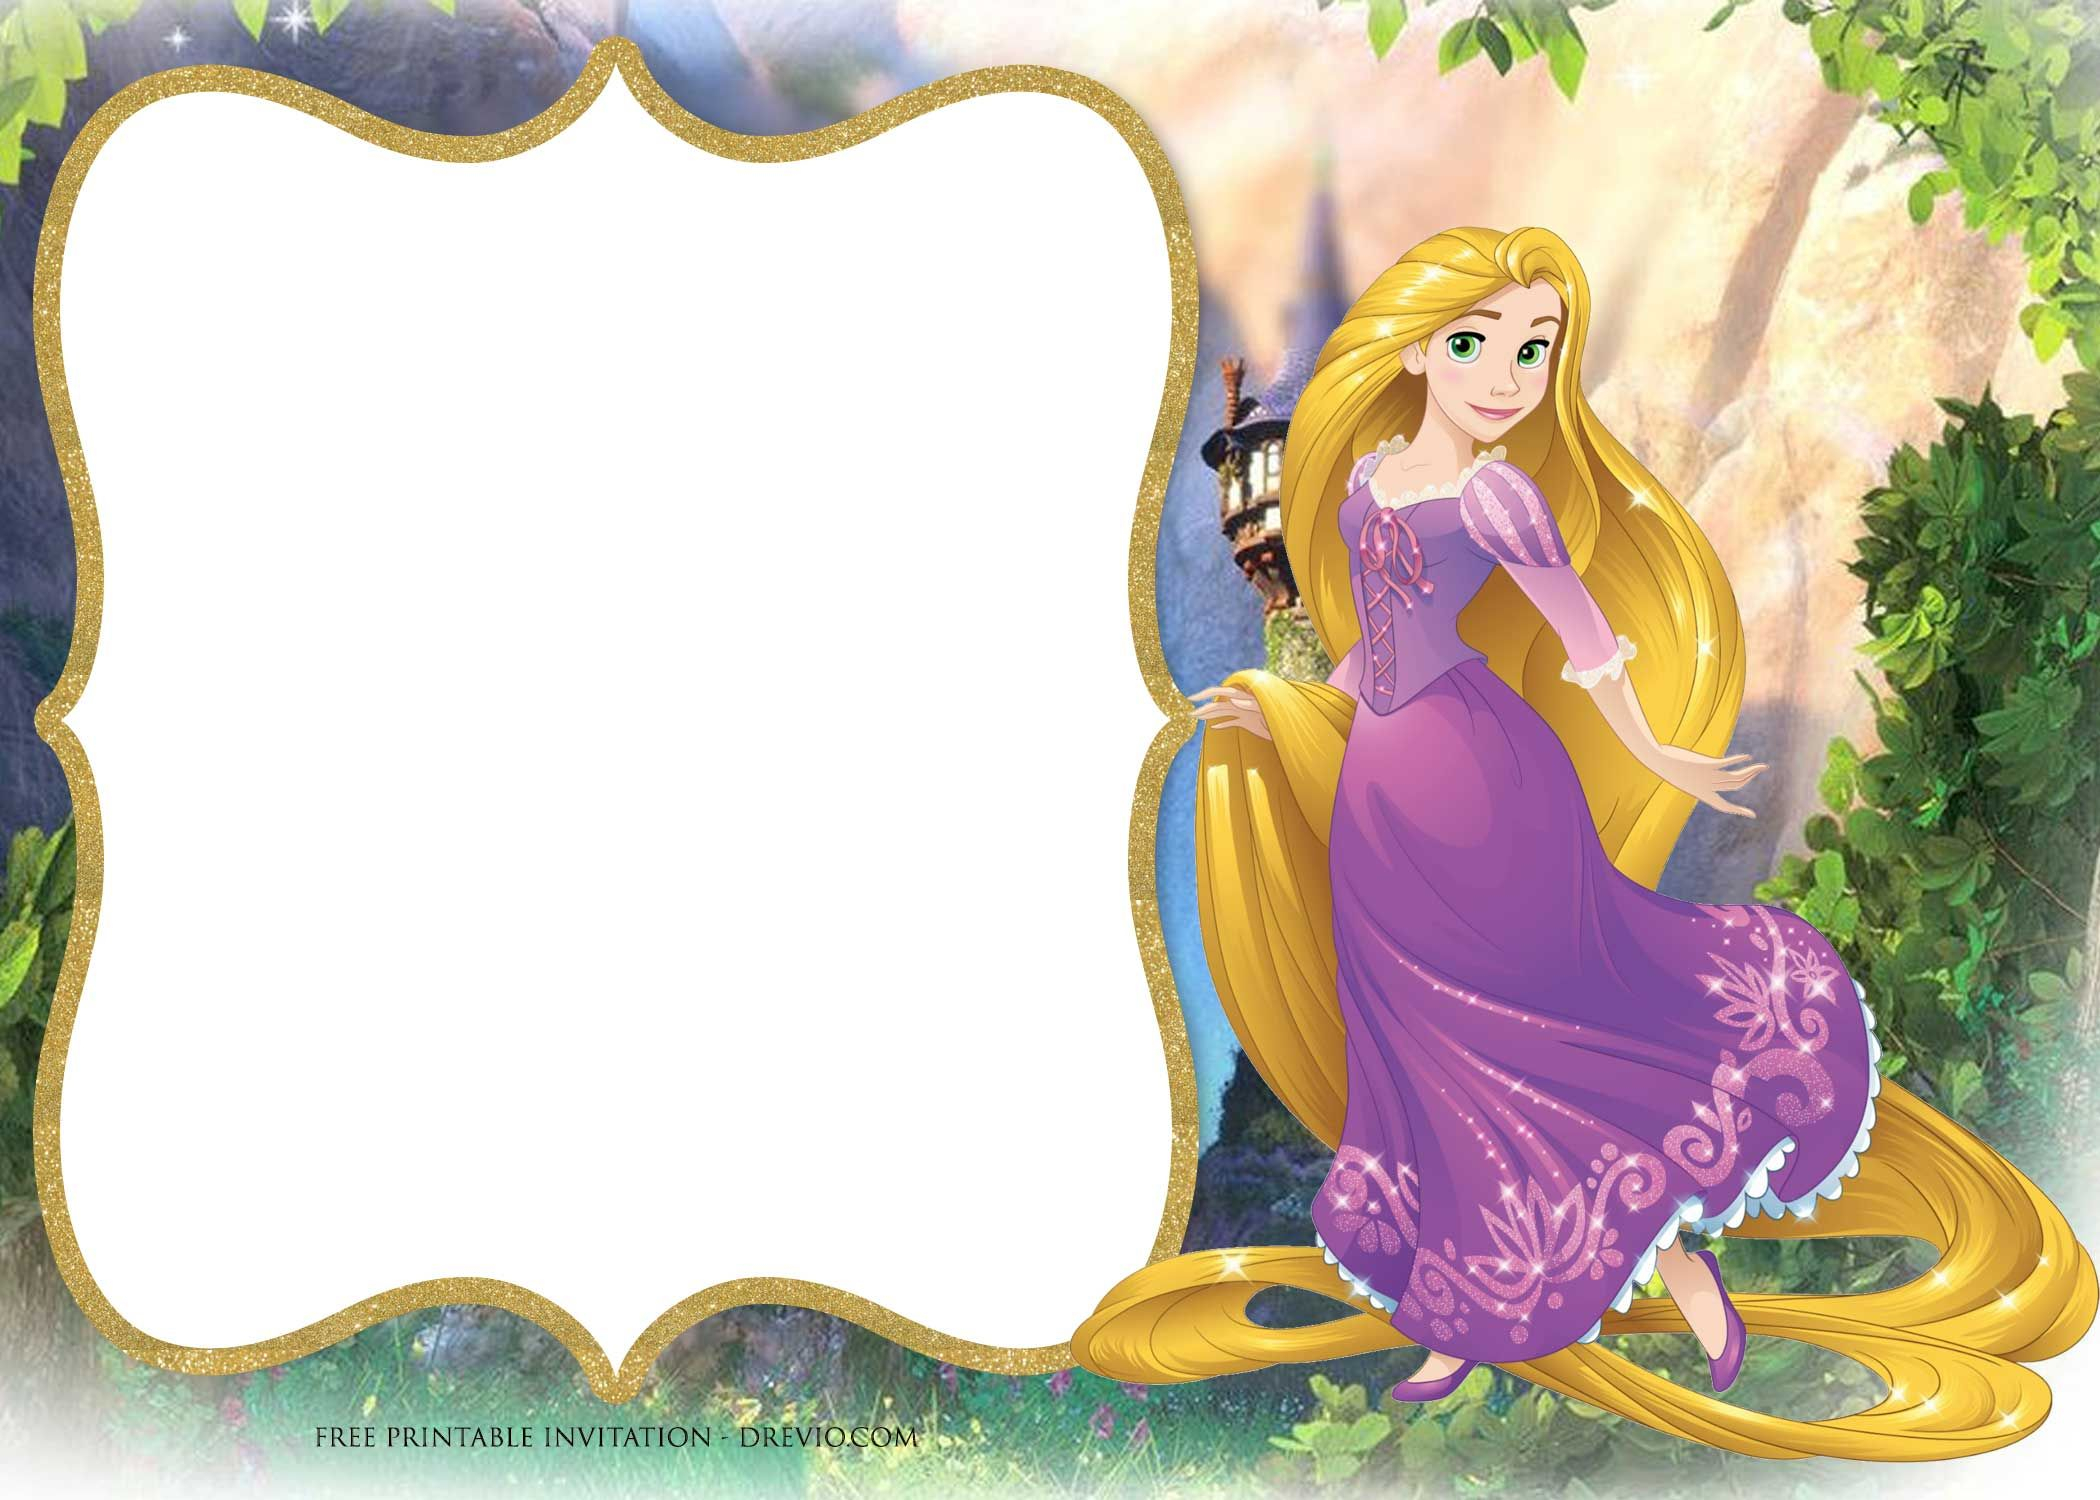 Free Printable Princess Rapunzel Invitation Free Printable inside dimensions 2100 X 1500